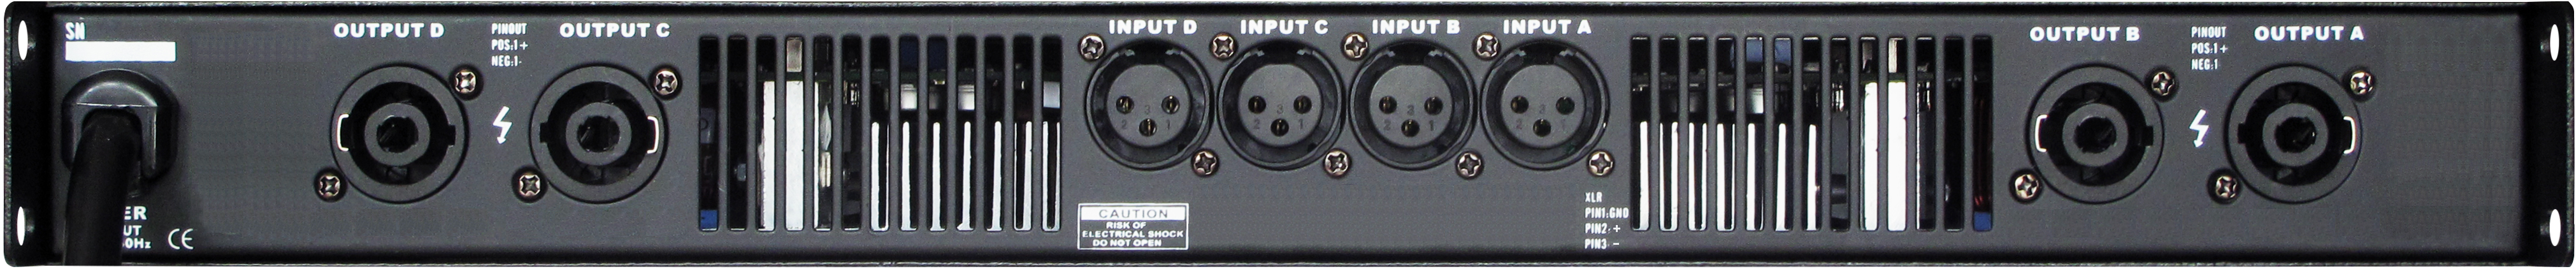 Verstärker M80Q - GISEN Audio B-Ware